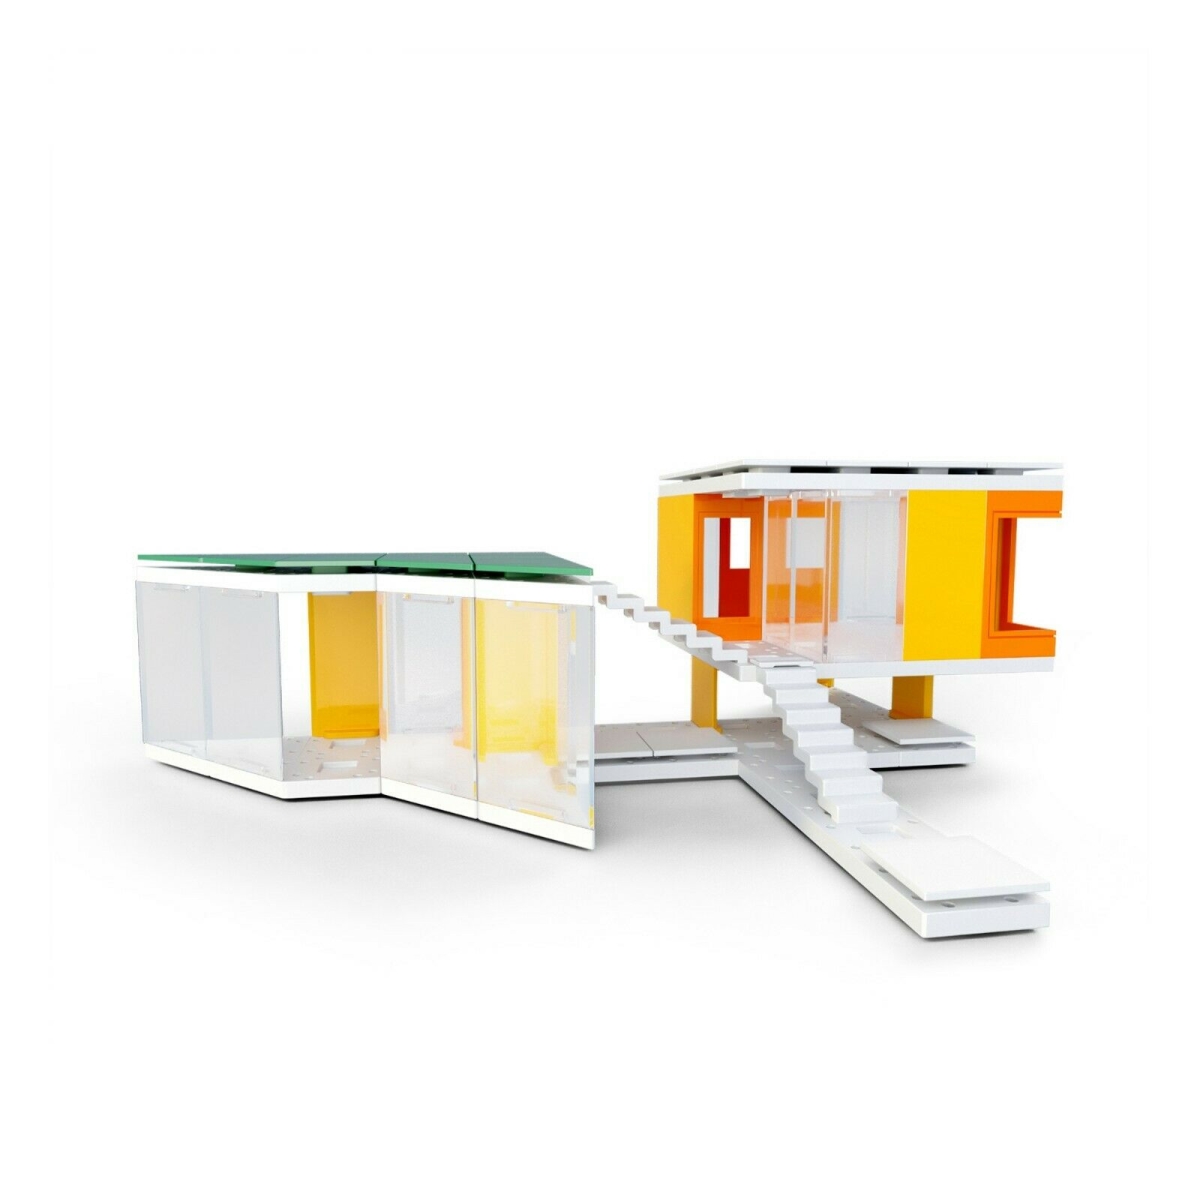 A10054 Mini Modern Colours 2.0 Architect Model Kit, 105 Piece